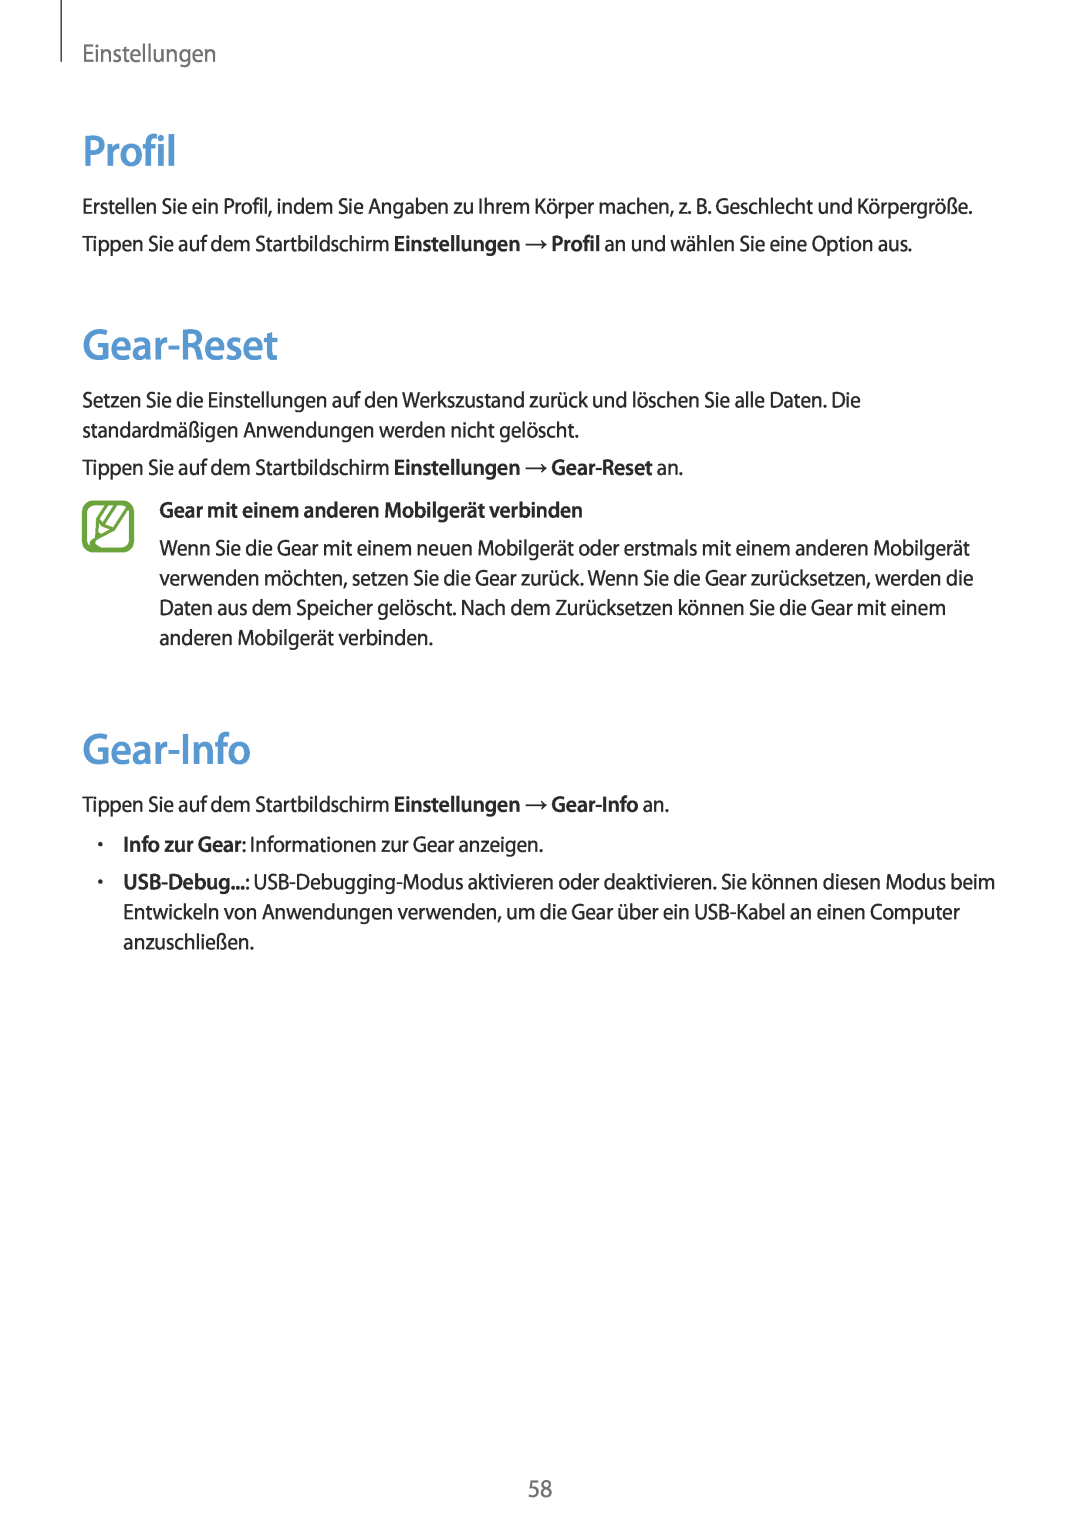 Samsung SM-V7000ZOATPH, SM-V7000ZOATUR, SM-V7000ZAADBT, SM-V7000ZWADBT manual Profil, Gear-Reset, Gear-Info, Einstellungen 